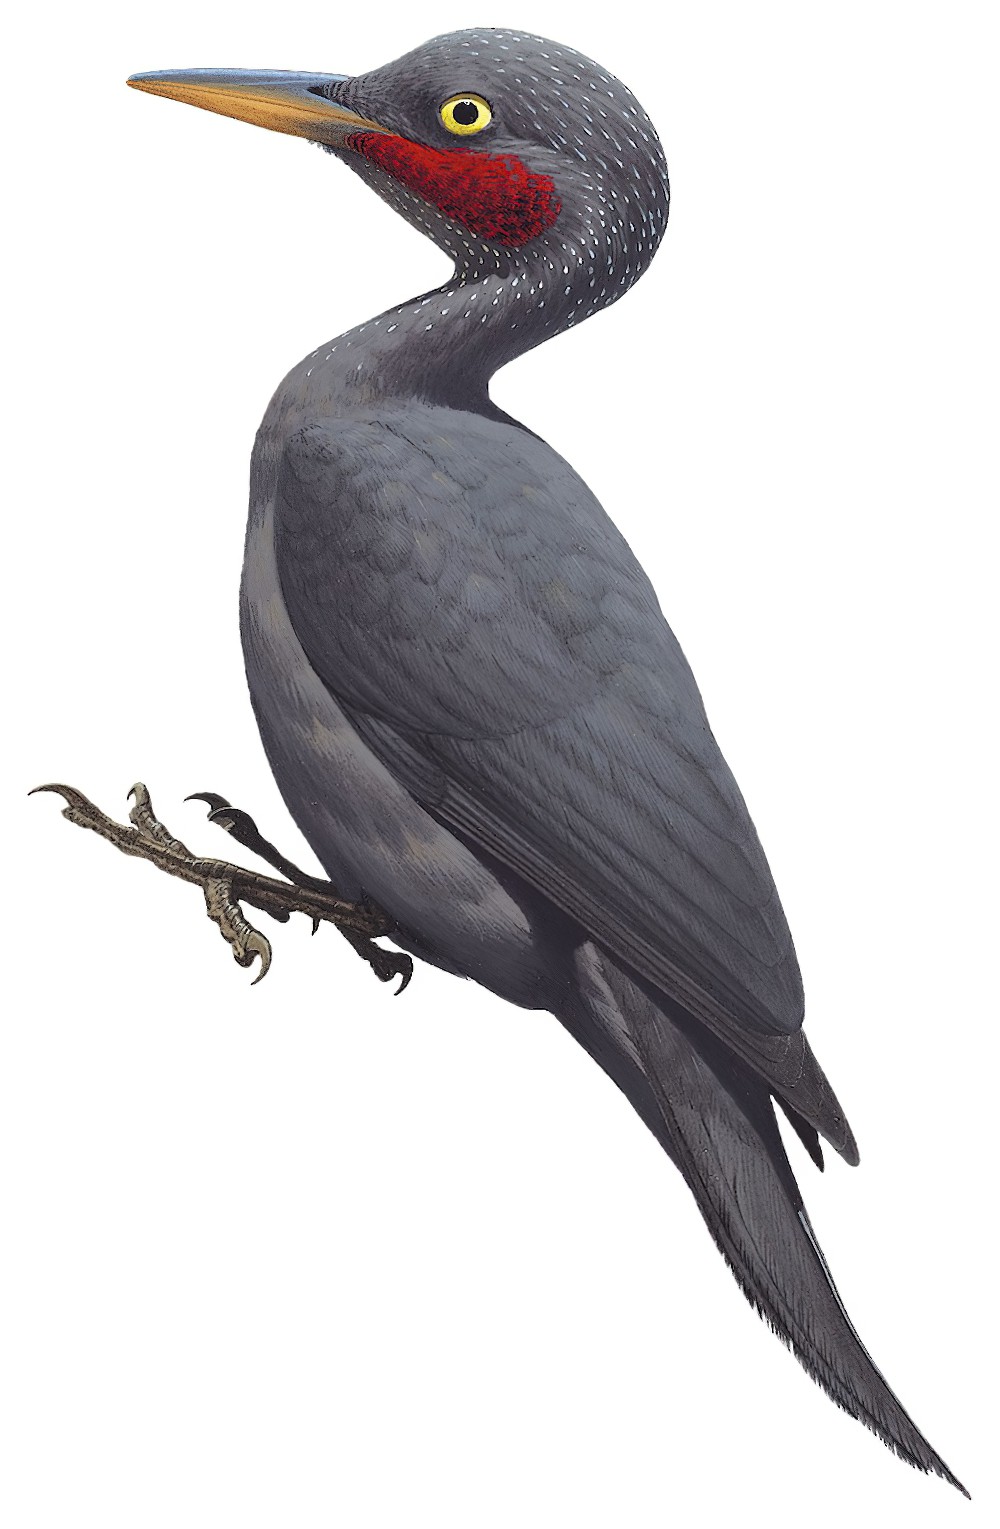 Southern Sooty-Woodpecker / Mulleripicus fuliginosus